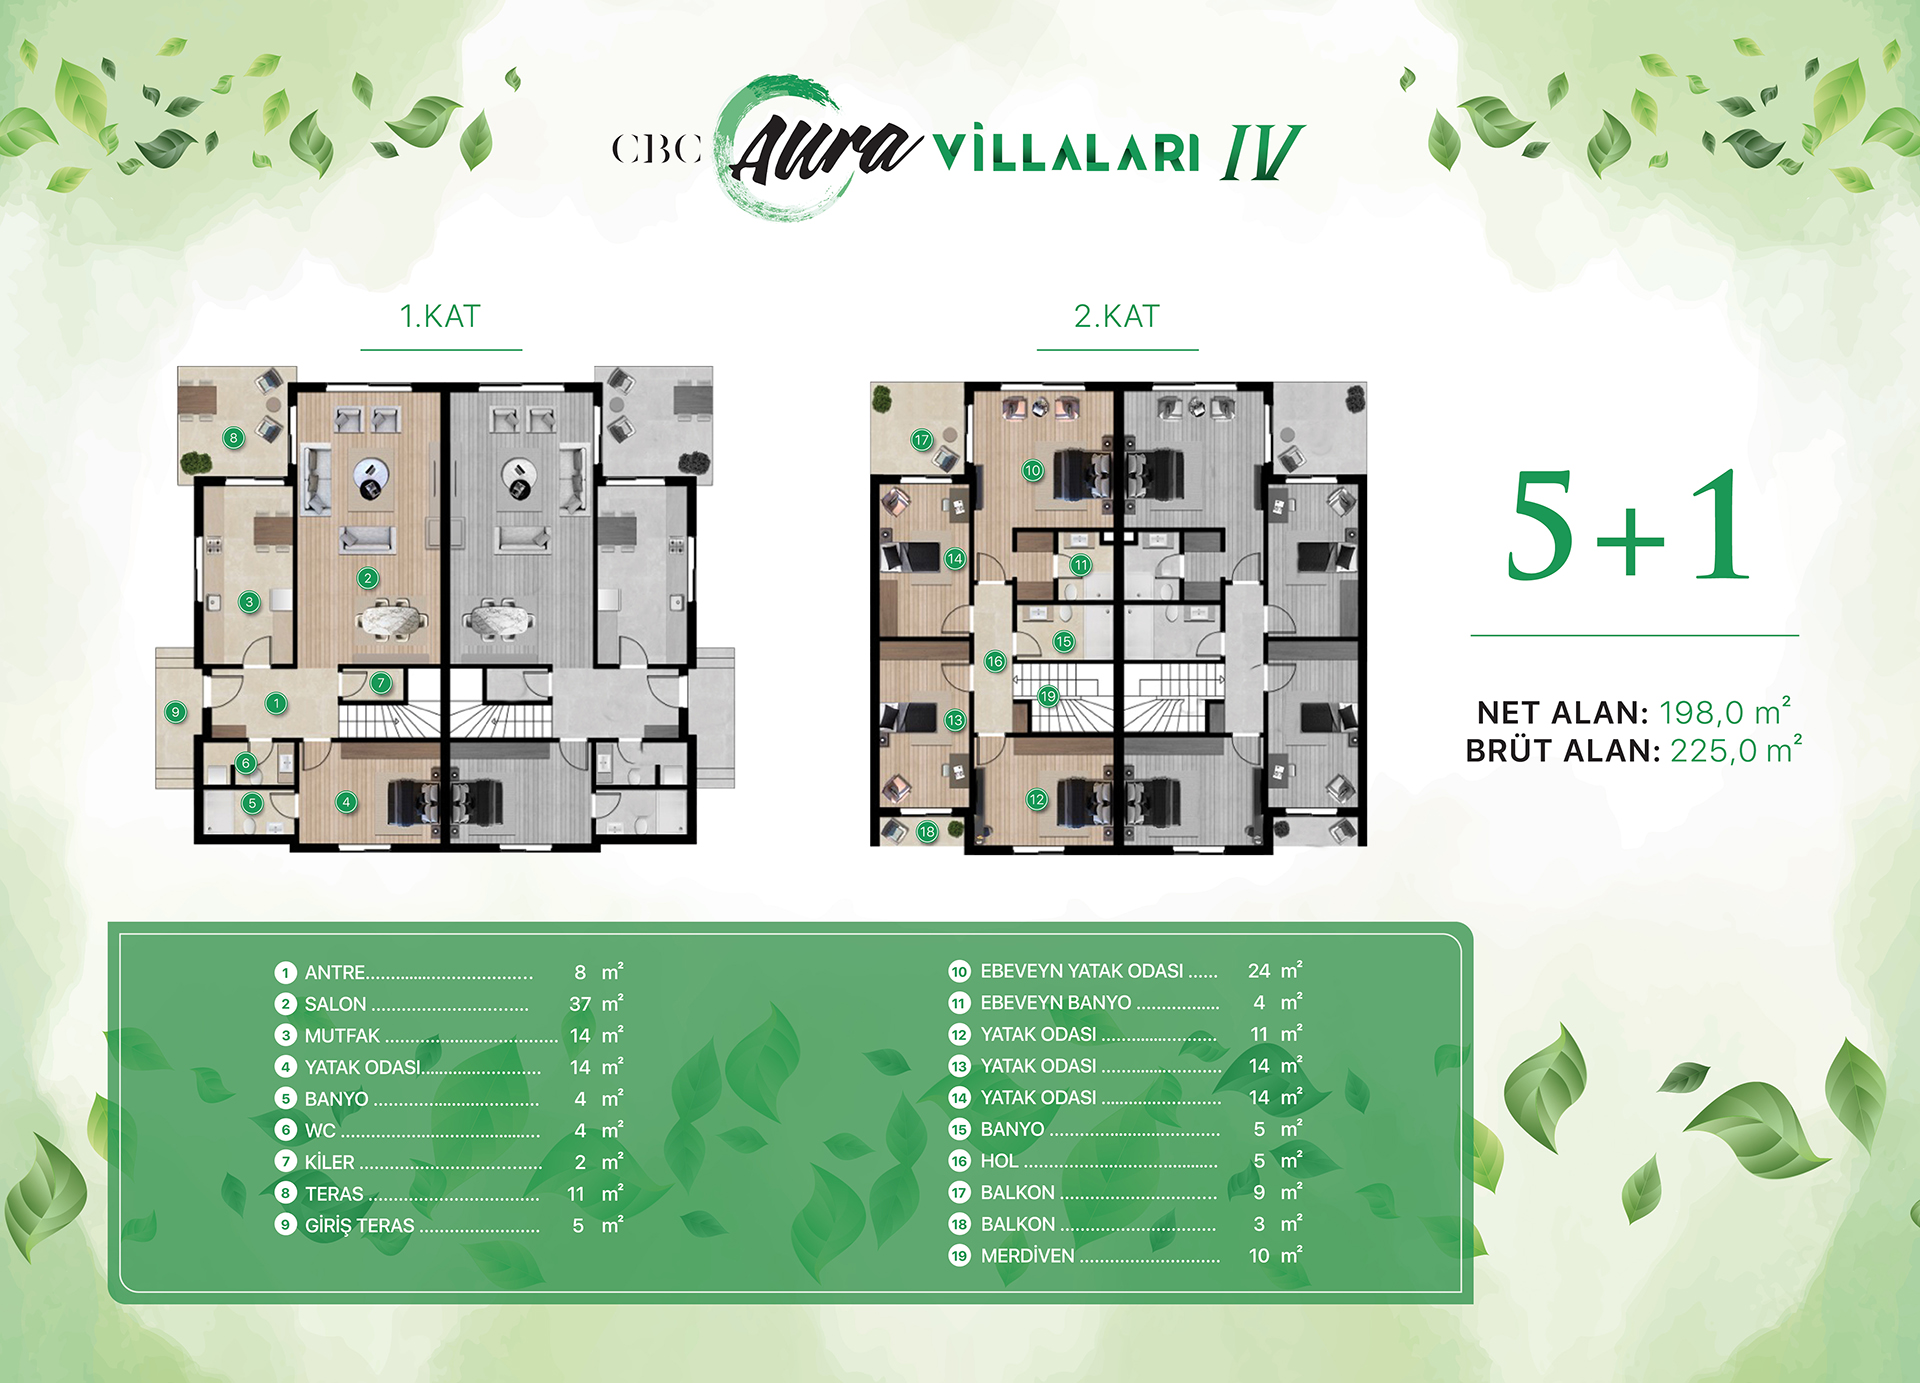 CBC AURA VİLLALARI IV - Villa Planı